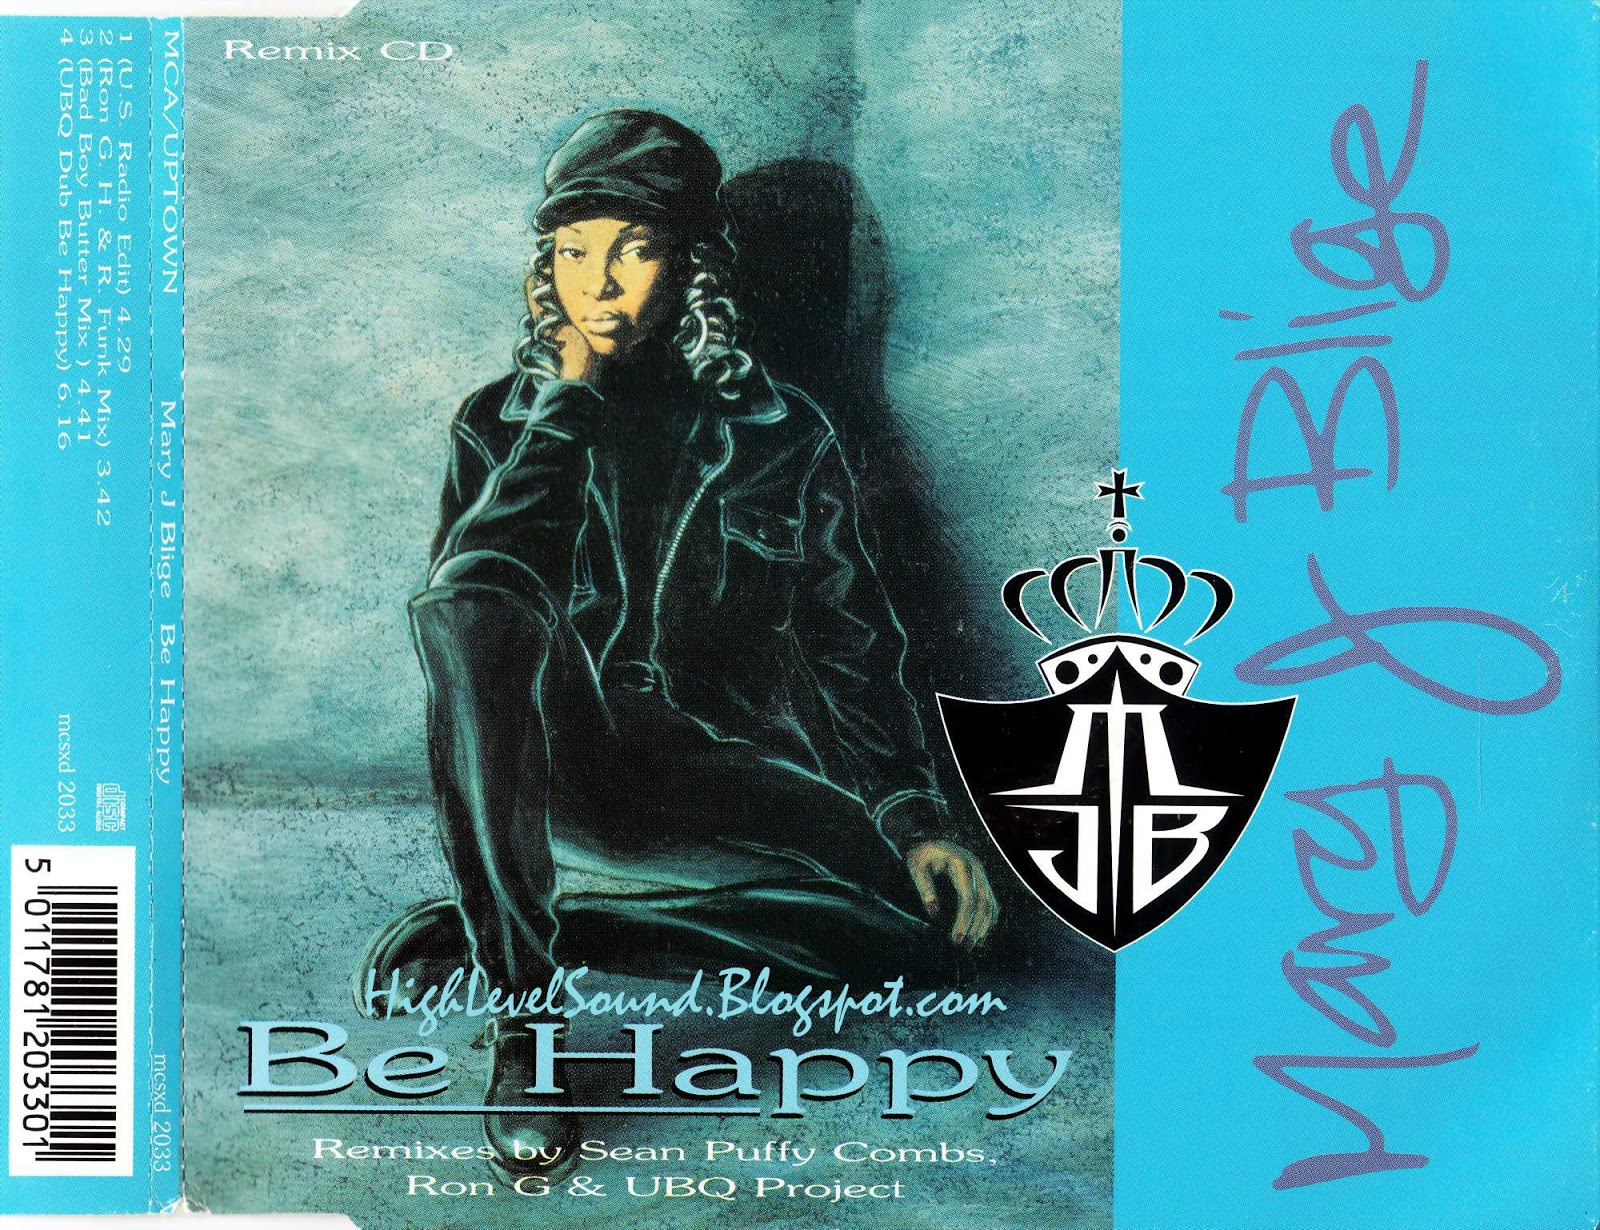 Mary j Blige Family Affair Instrumental. Be happy remix